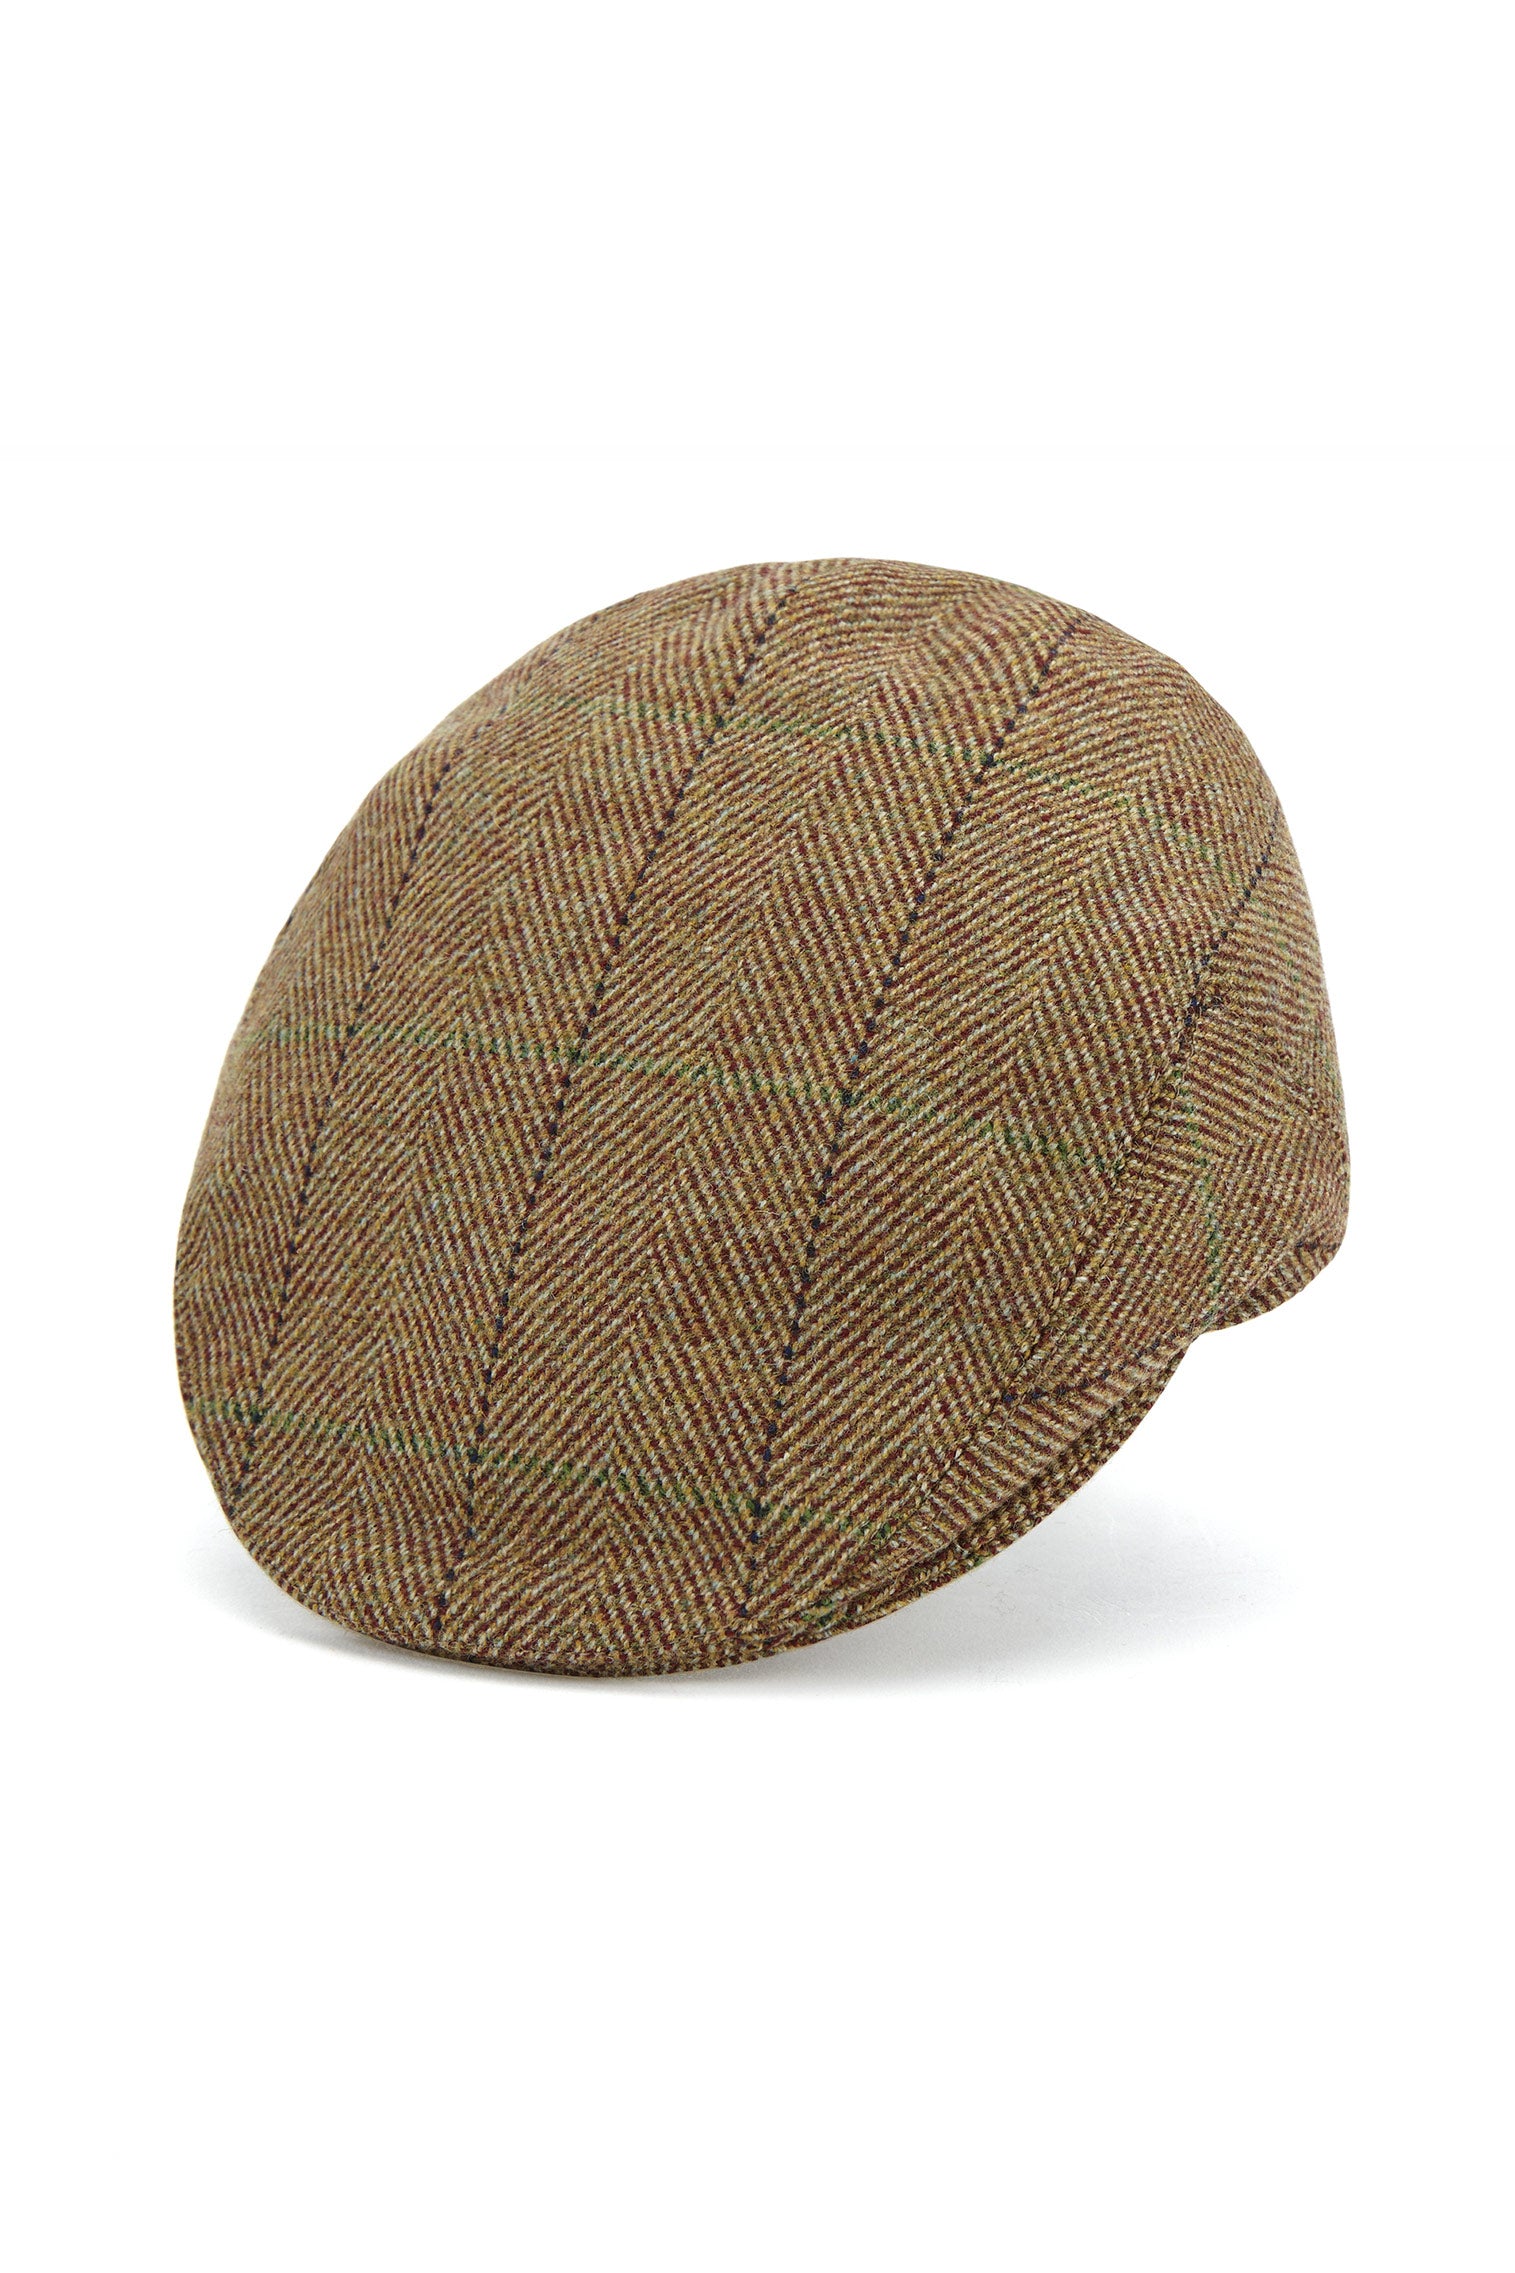 Gill Tweed Flat Cap -  - Lock & Co. Hatters London UK